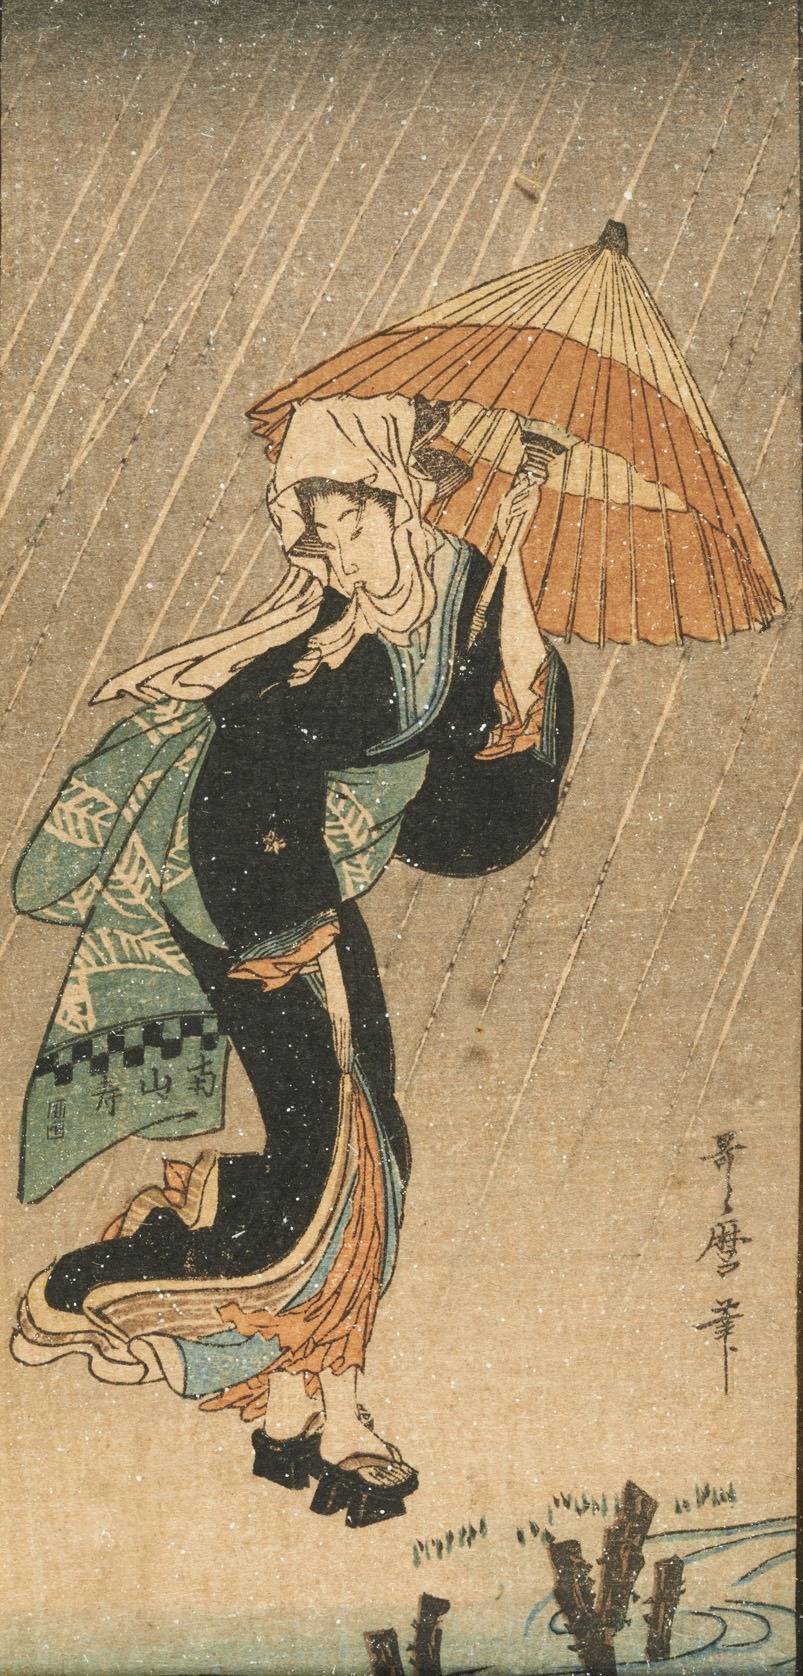 Beauty in the Rain, c. 1802. Kitagawa Utamaro.